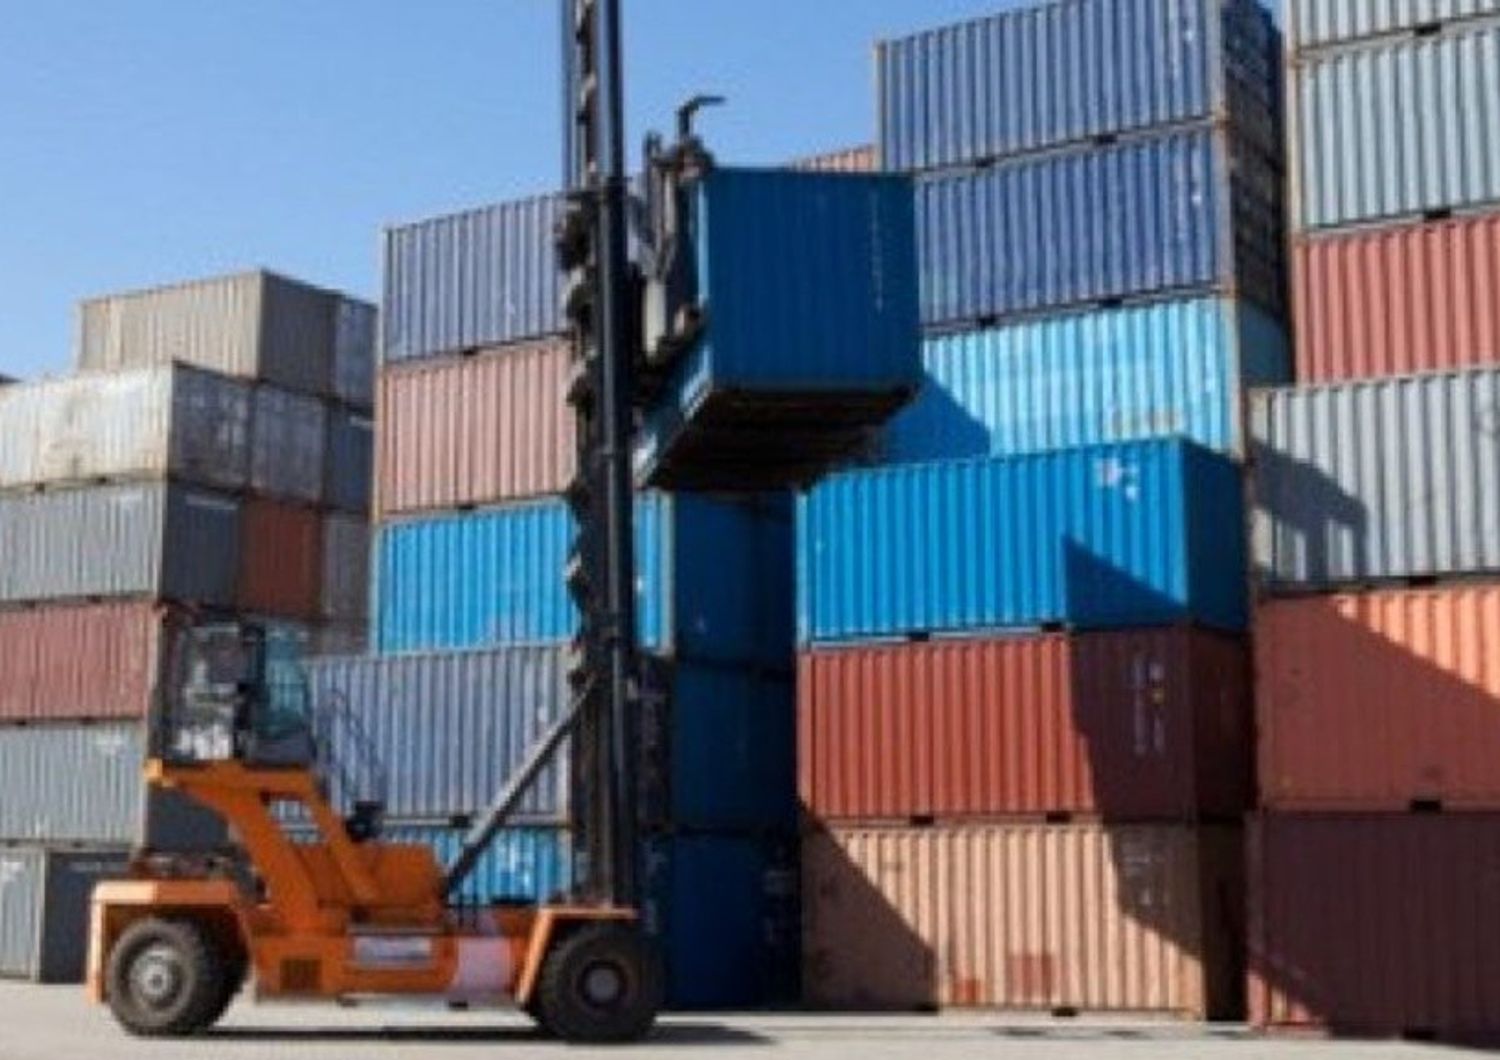 Export cresce a aprile +9%, avanzo commerciale sale a 3,7 miliardi